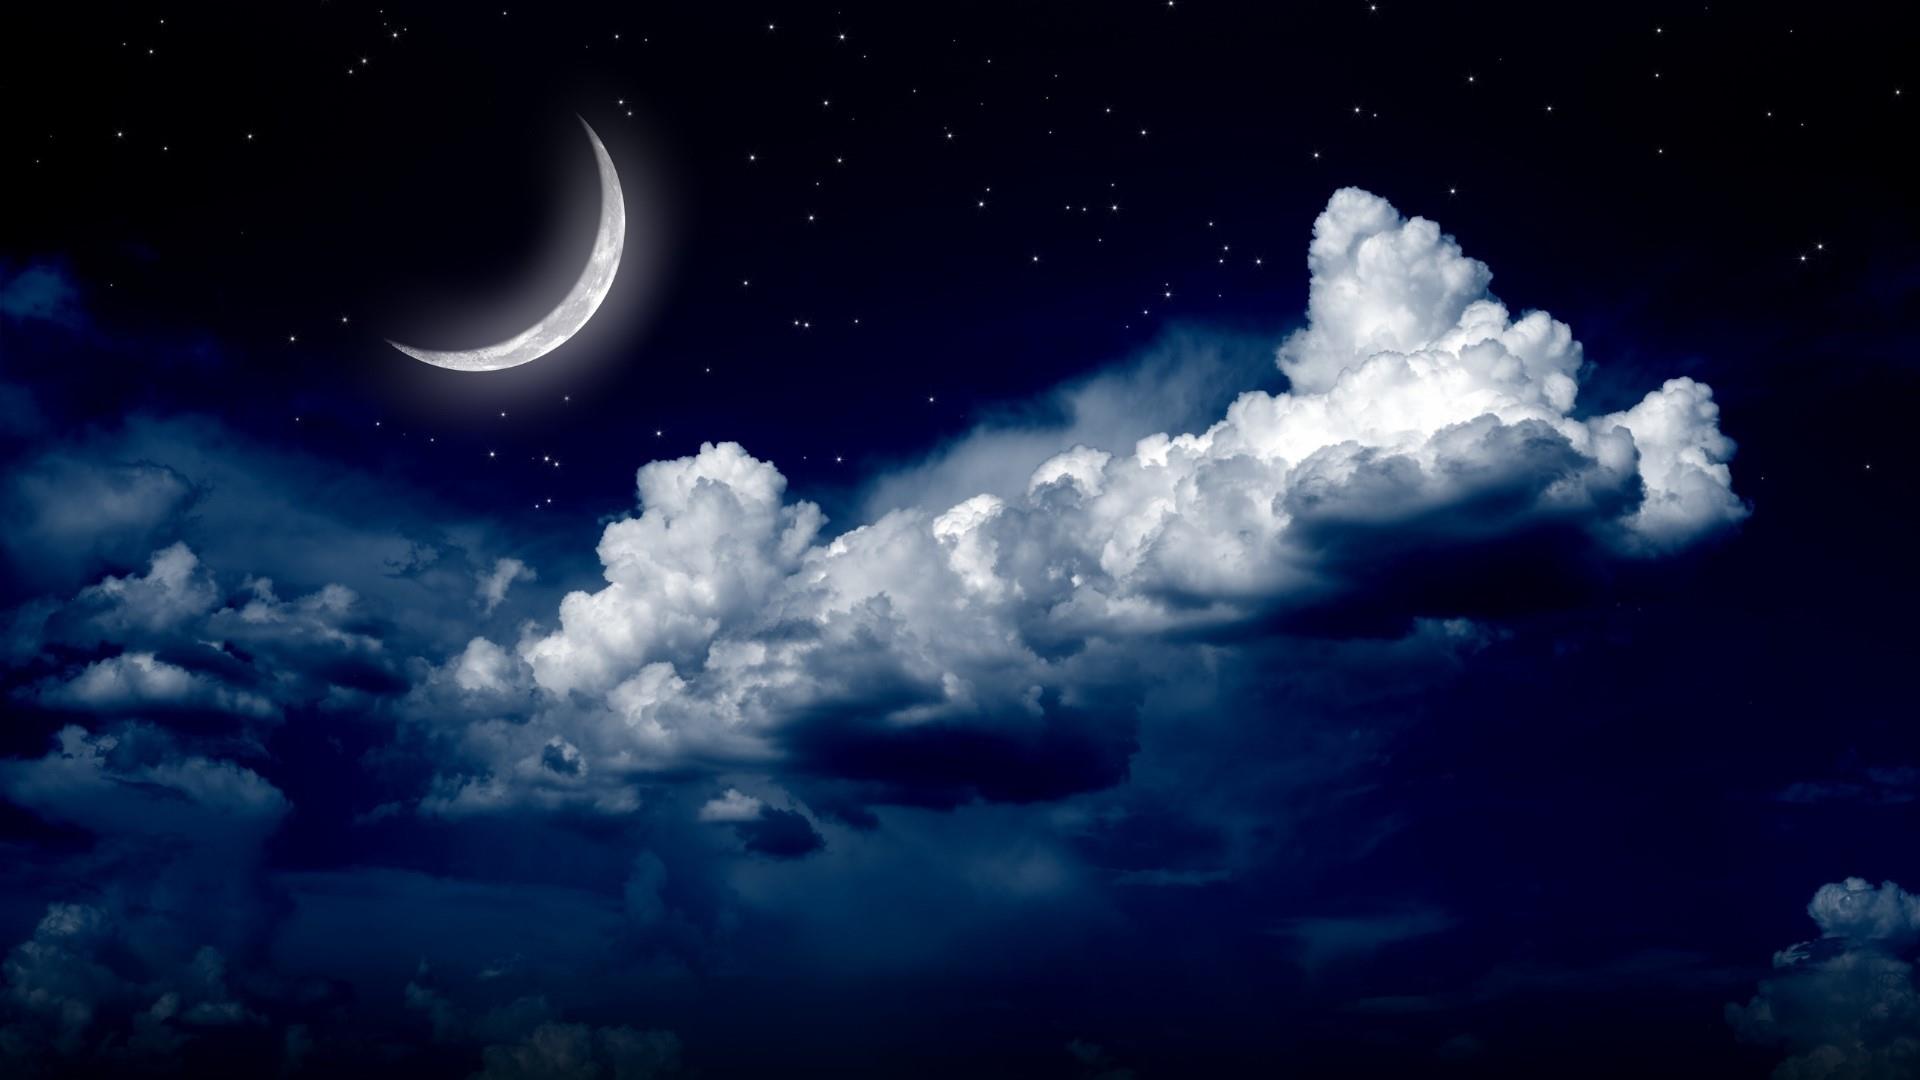 Starry Night Sky With The Moon Wallpaper | Wallpaper Studio 10 ...